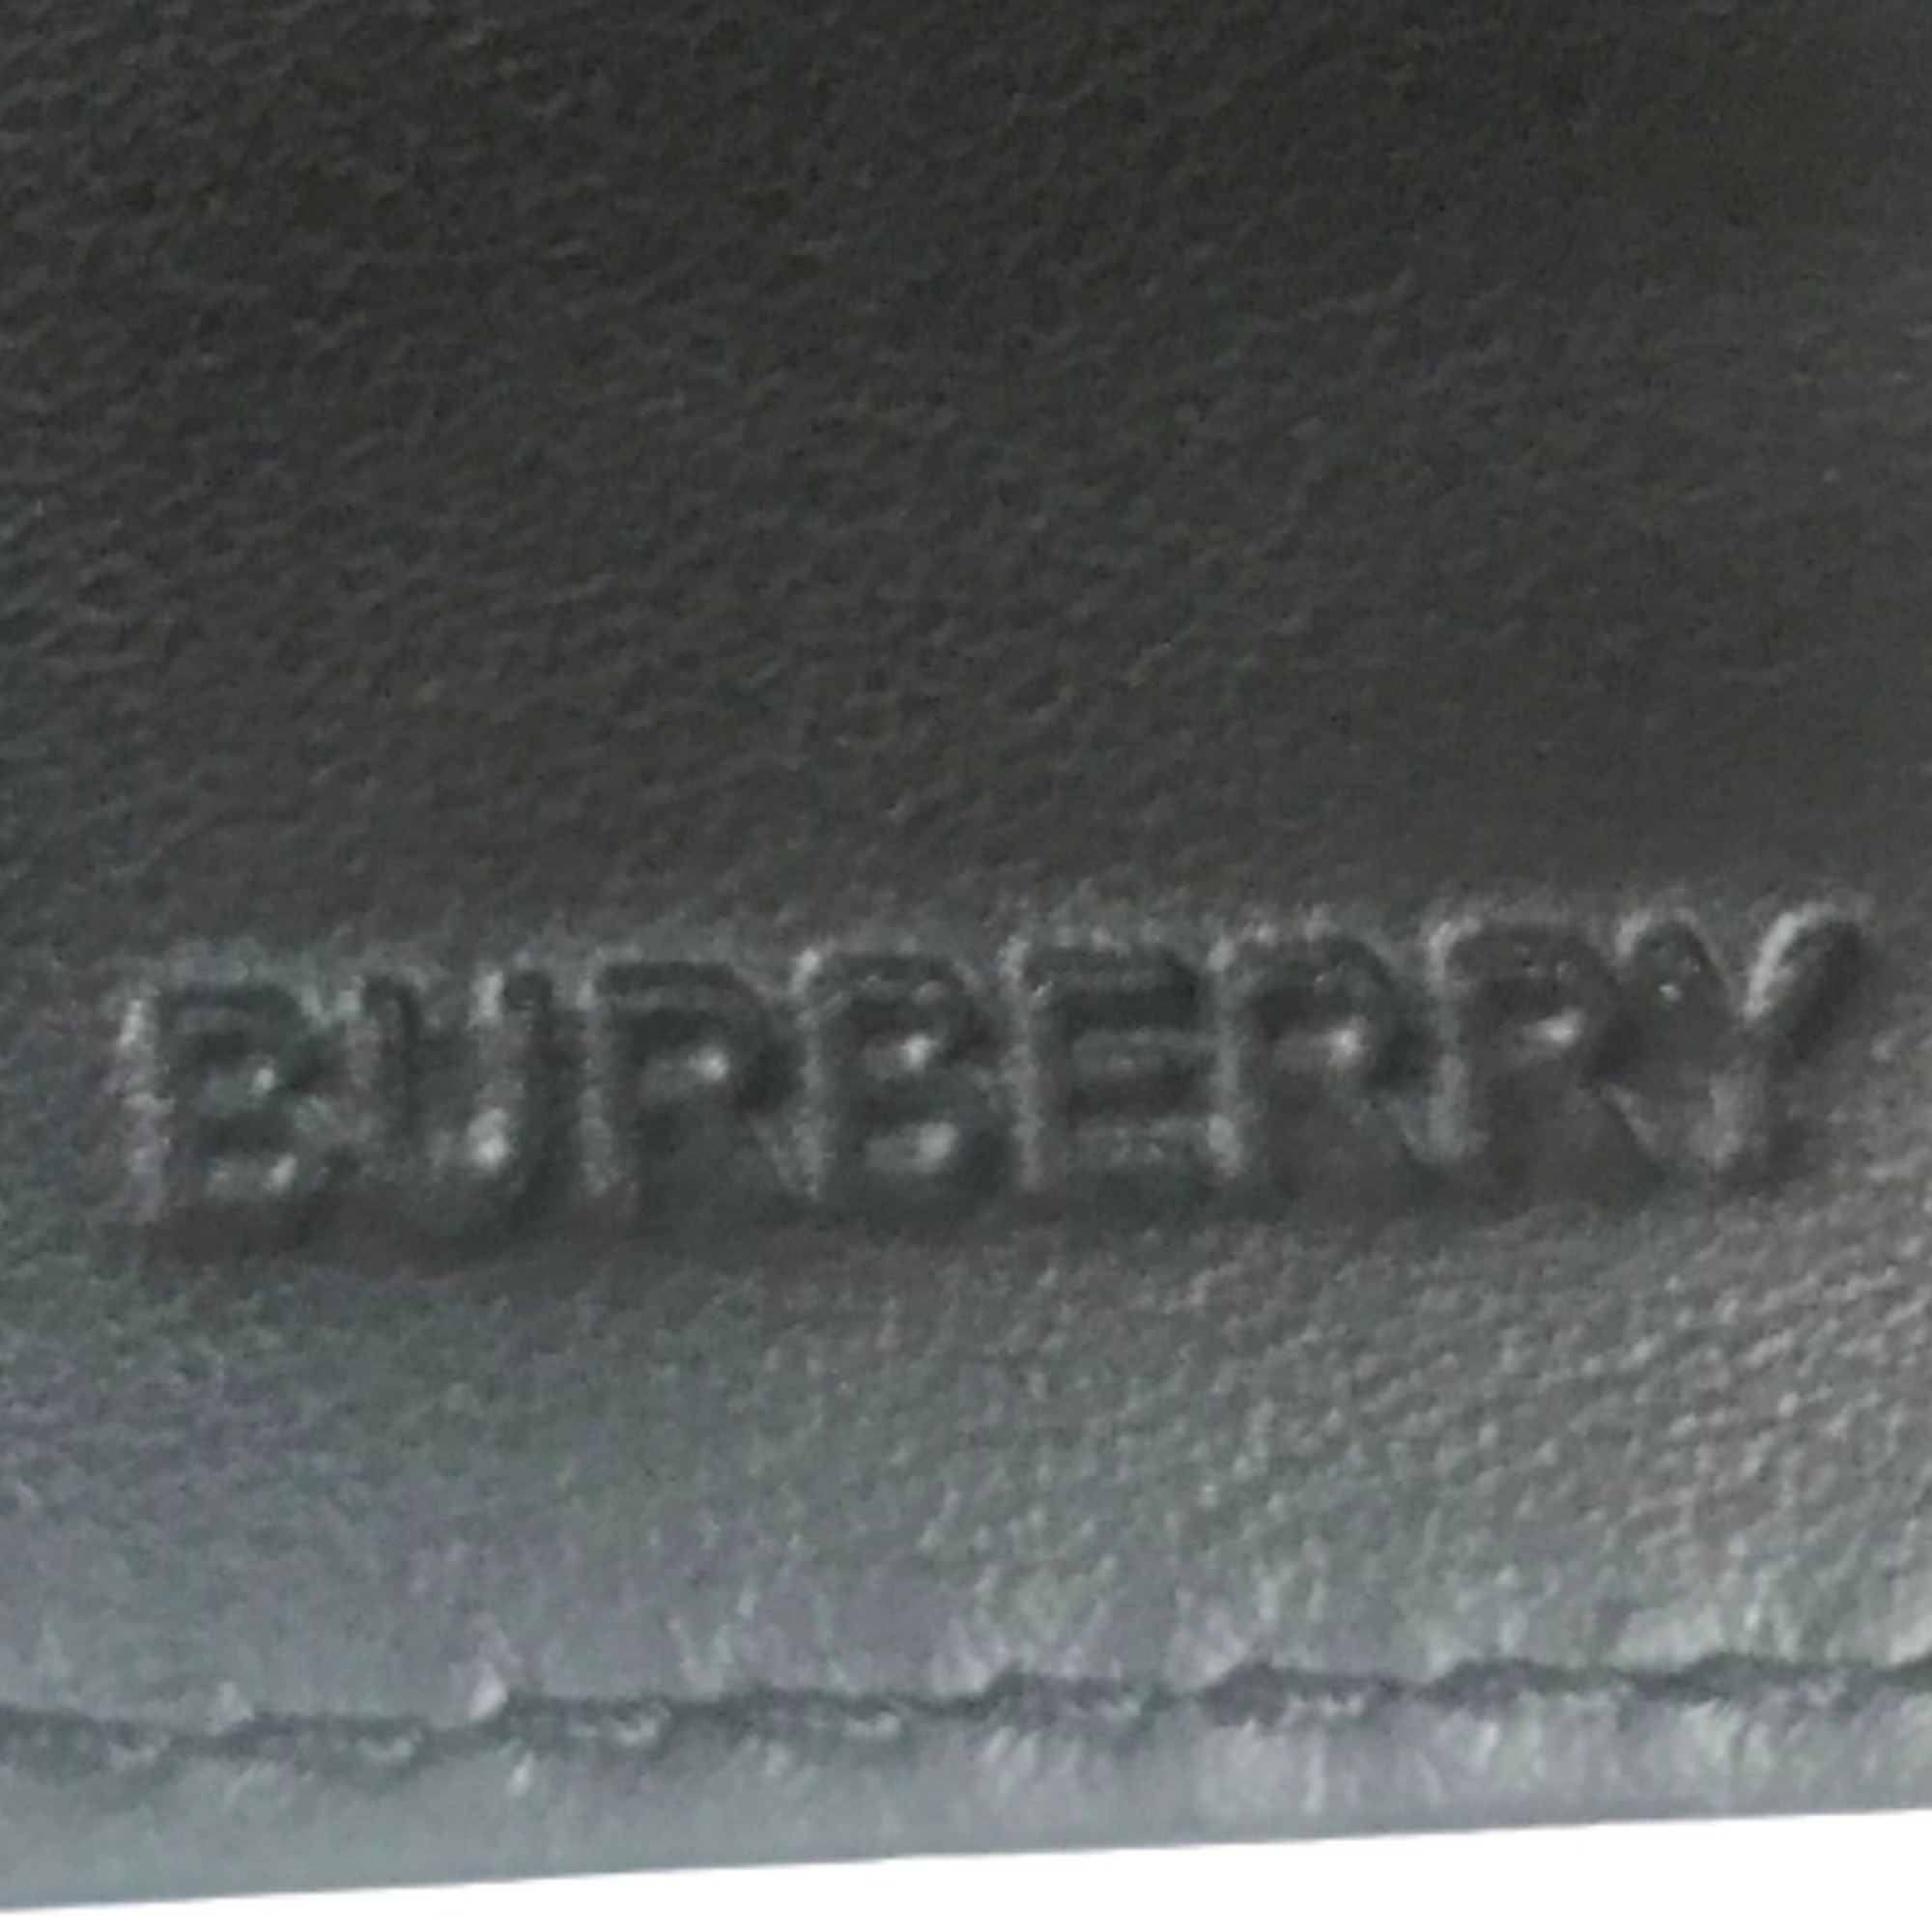 BURBERRY Men's Leather Black Bi-fold Wallet MDTITSIC70CHI